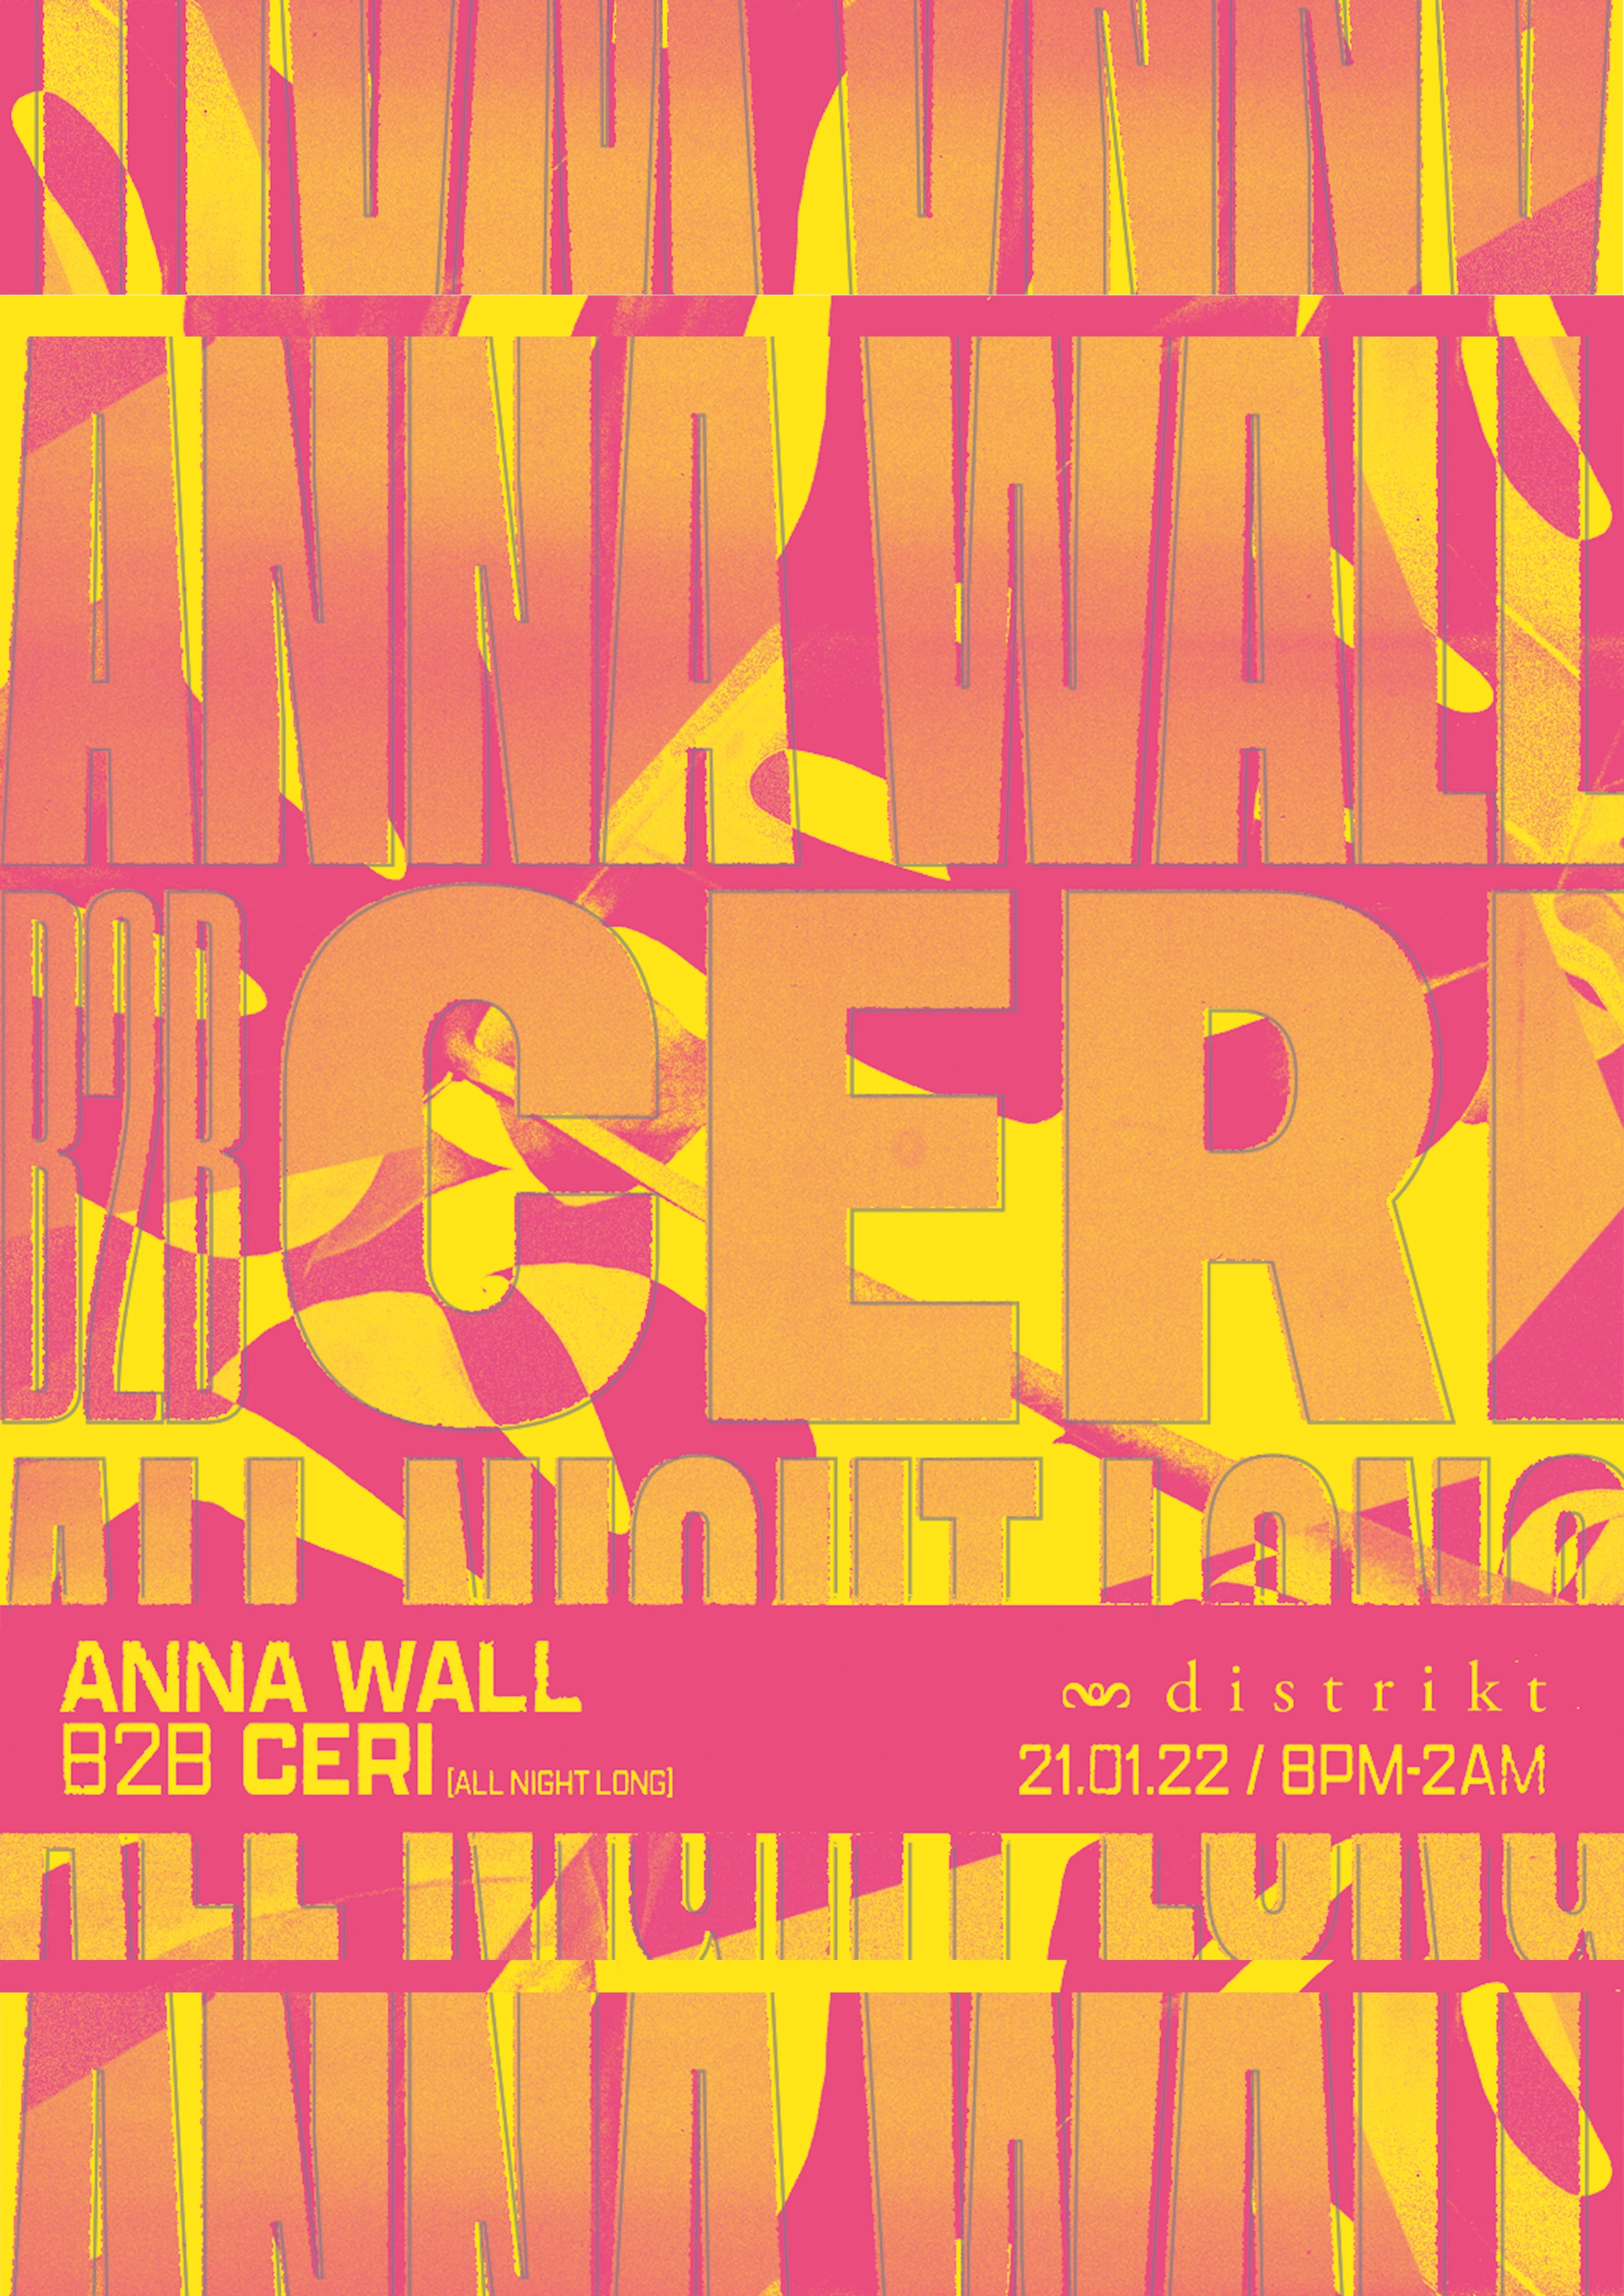 Distrikt presents: Anna Wall B2B Ceri All Night Long - Free Entry - Flyer front